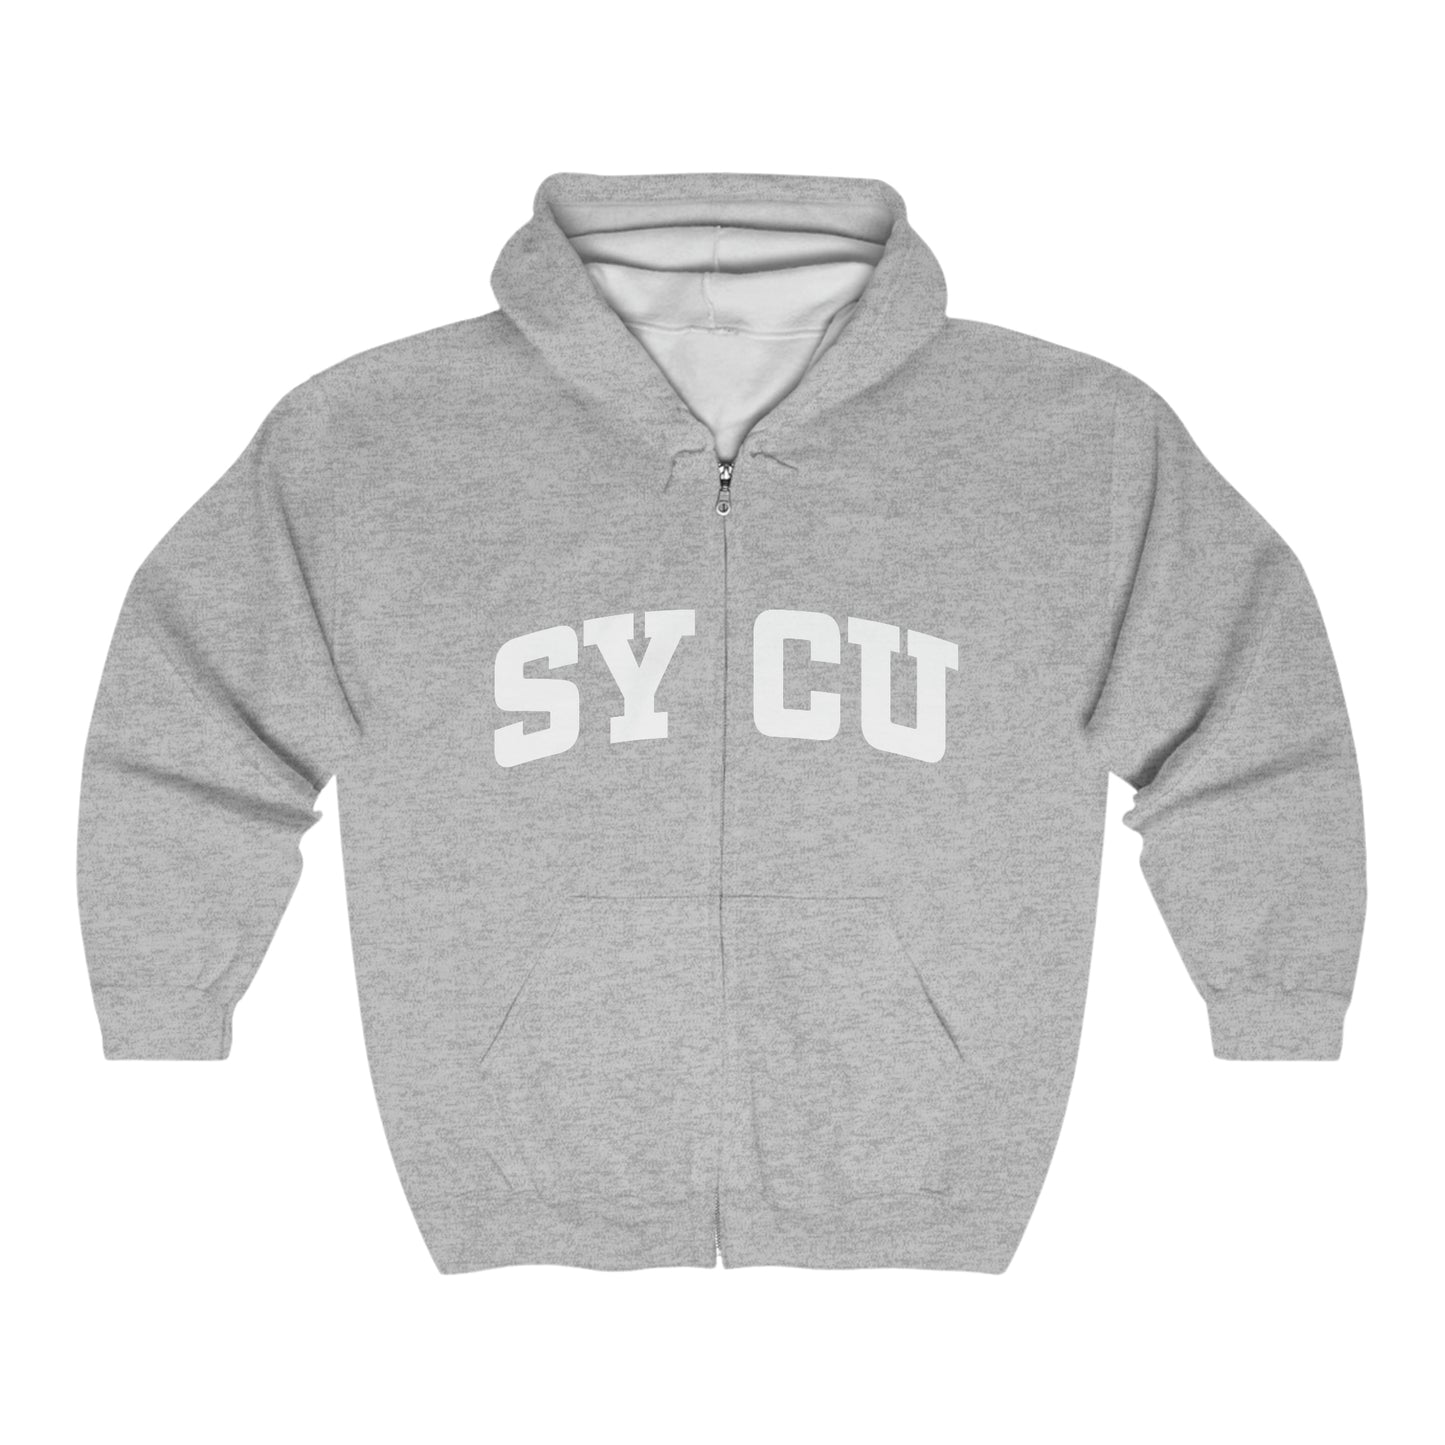 White College | SYCU | Zip Up Hoodie